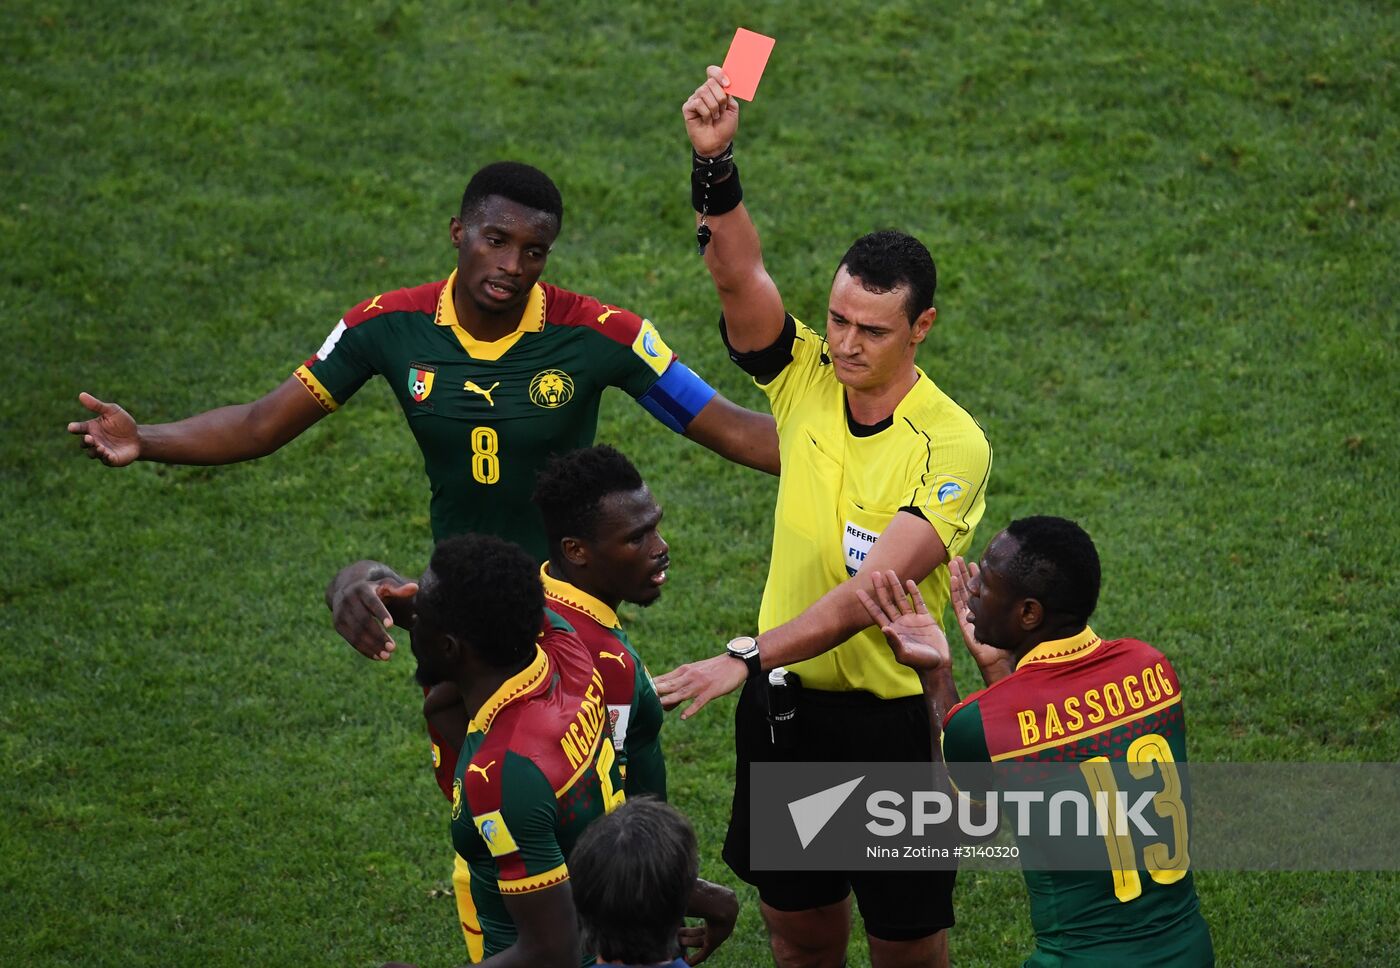 Football. 2017 FIFA Confederations Cup. Germany vs. Cameroon